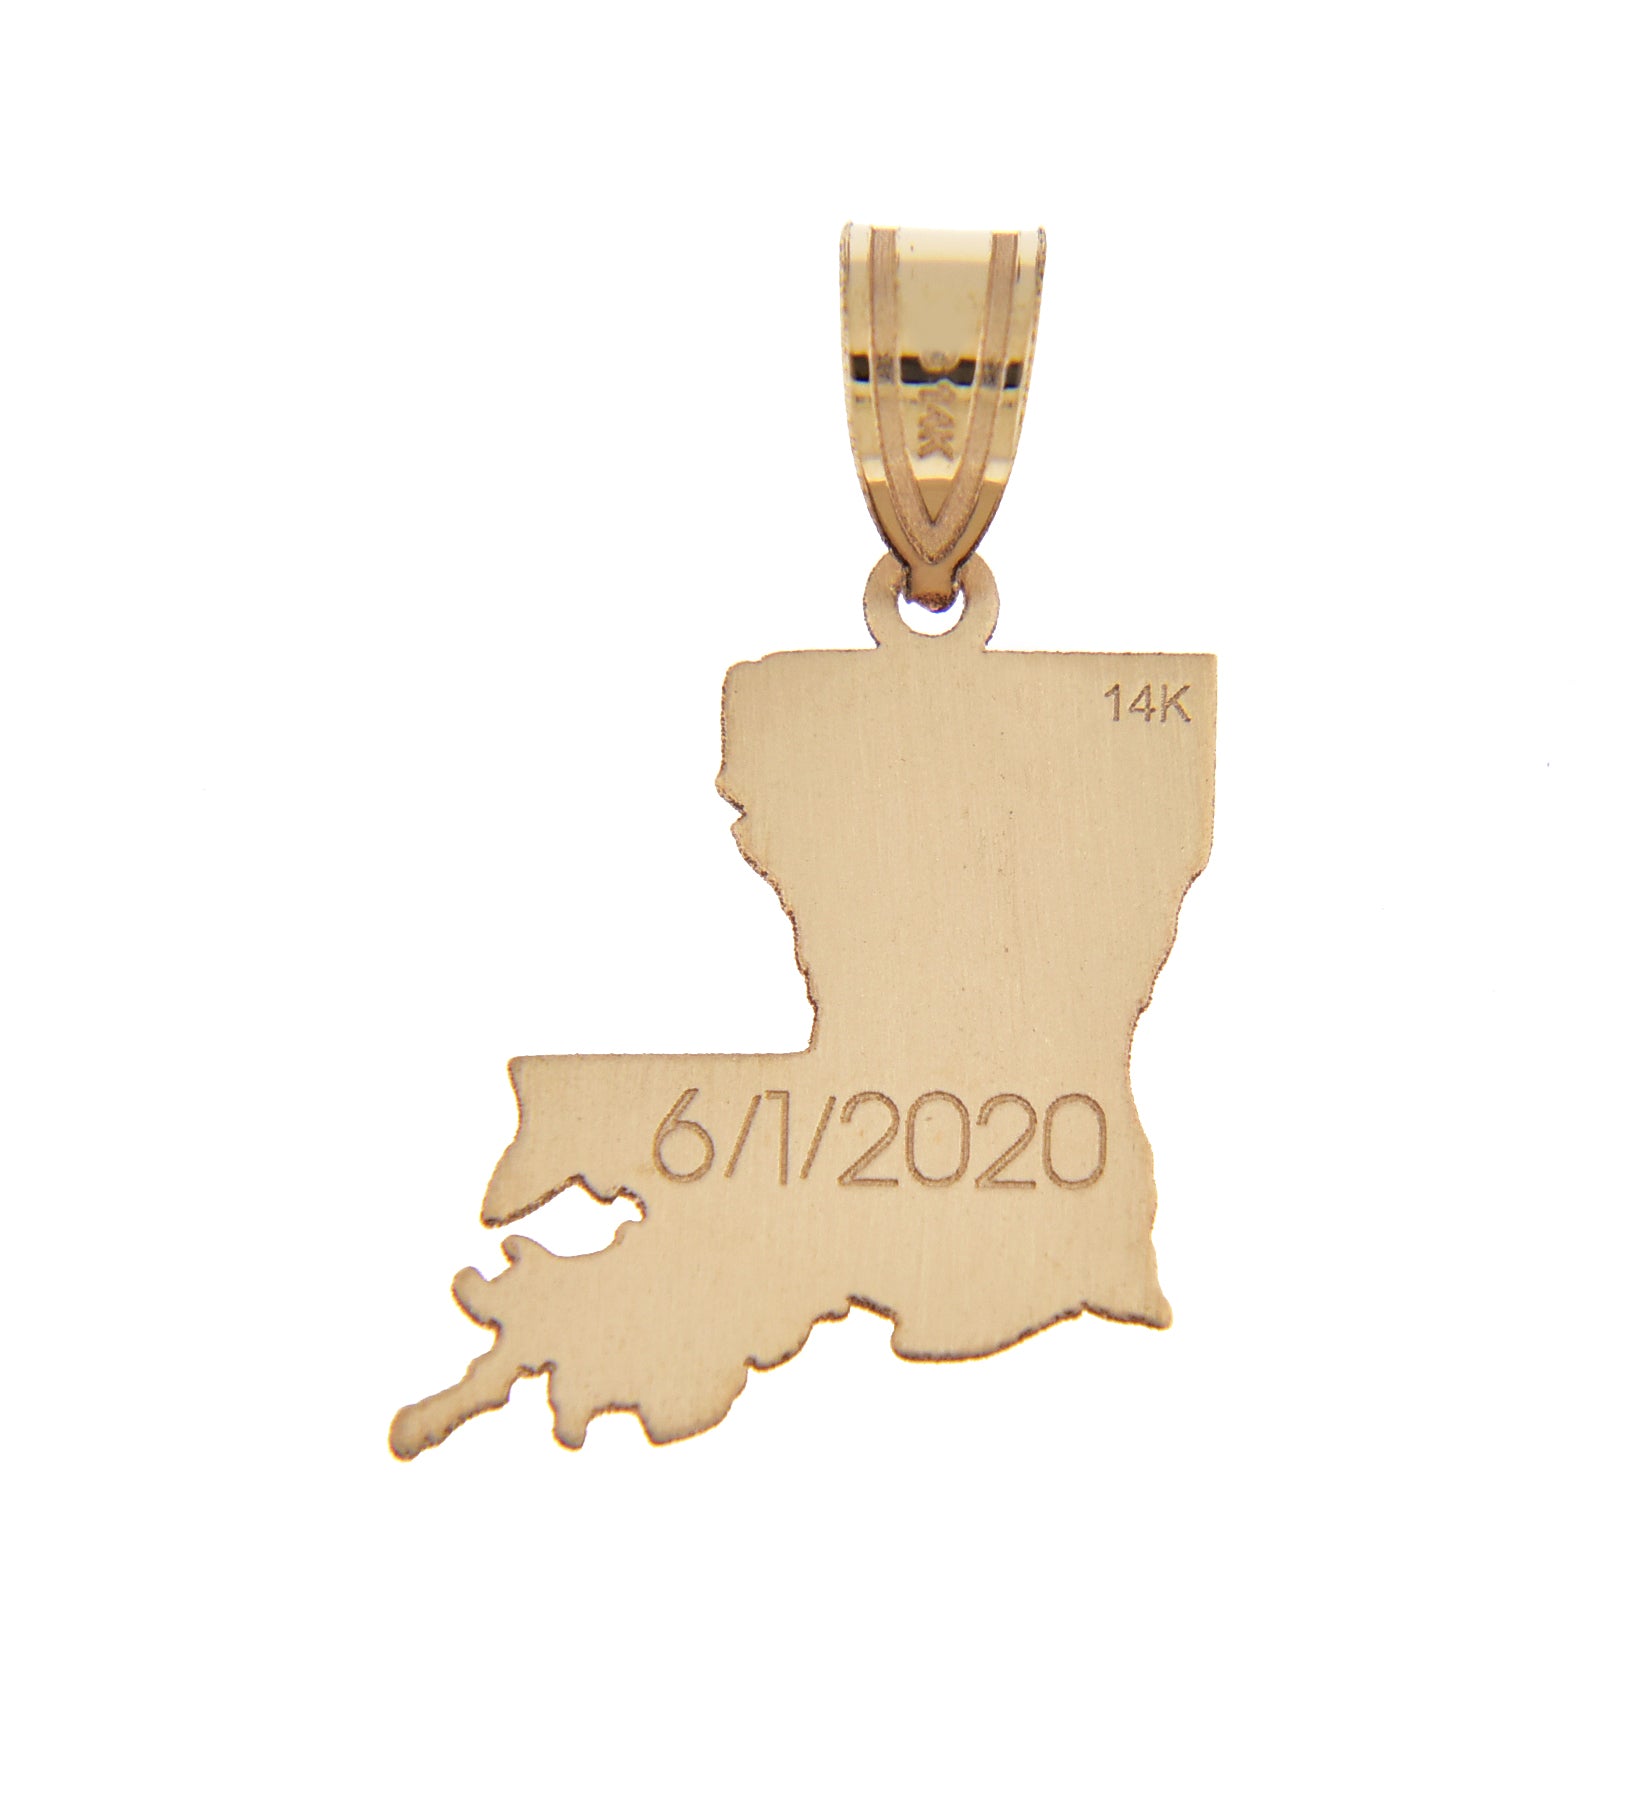 Personalized Louisiana State Necklace Louisiana State Map 